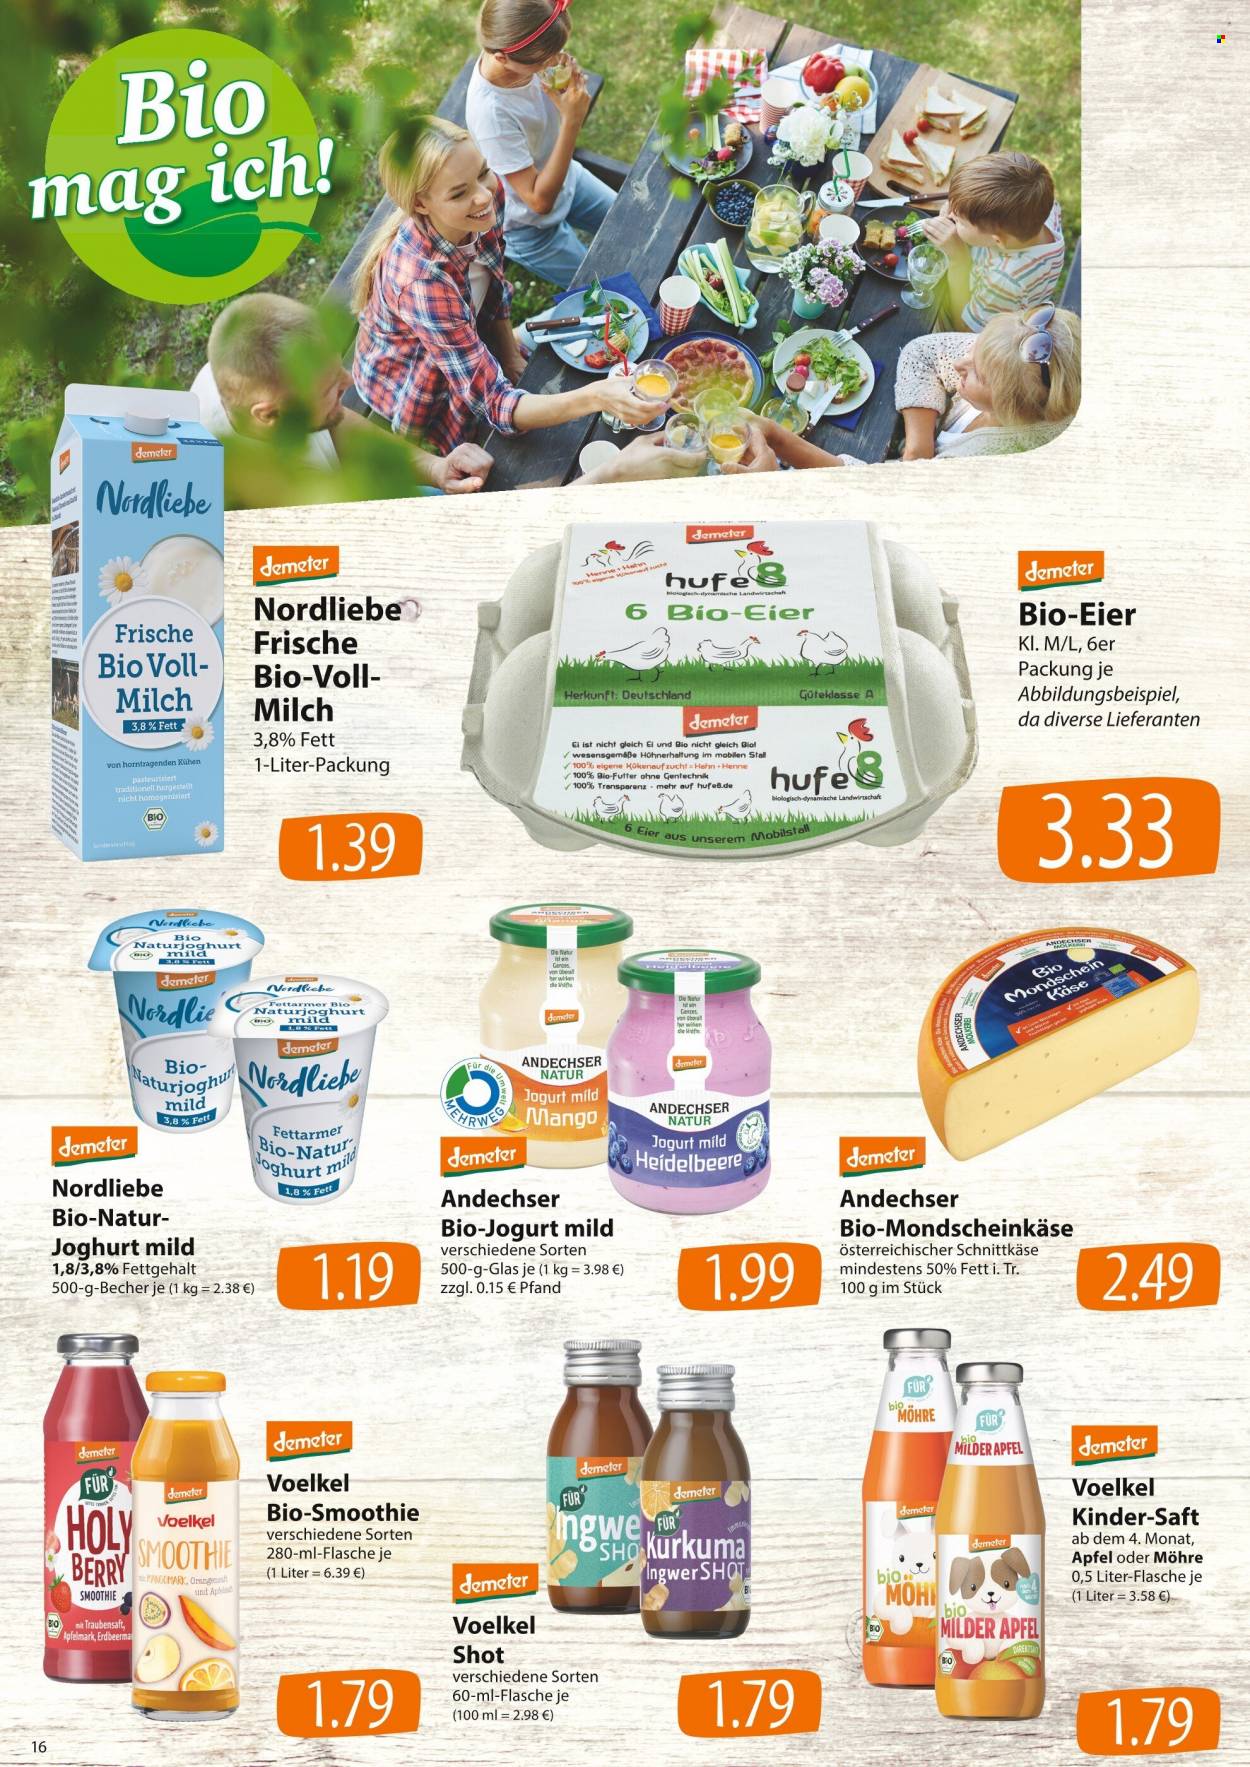 thumbnail - Prospekte famila - 16.05.2022 - 21.05.2022 - Produkte in Aktion - Käse, Schnittkäse, Joghurt, Bio-Joghurt, Voelkel, Eier, Saft, Traubensaft, Smoothie, Ingwershot. Seite 16.